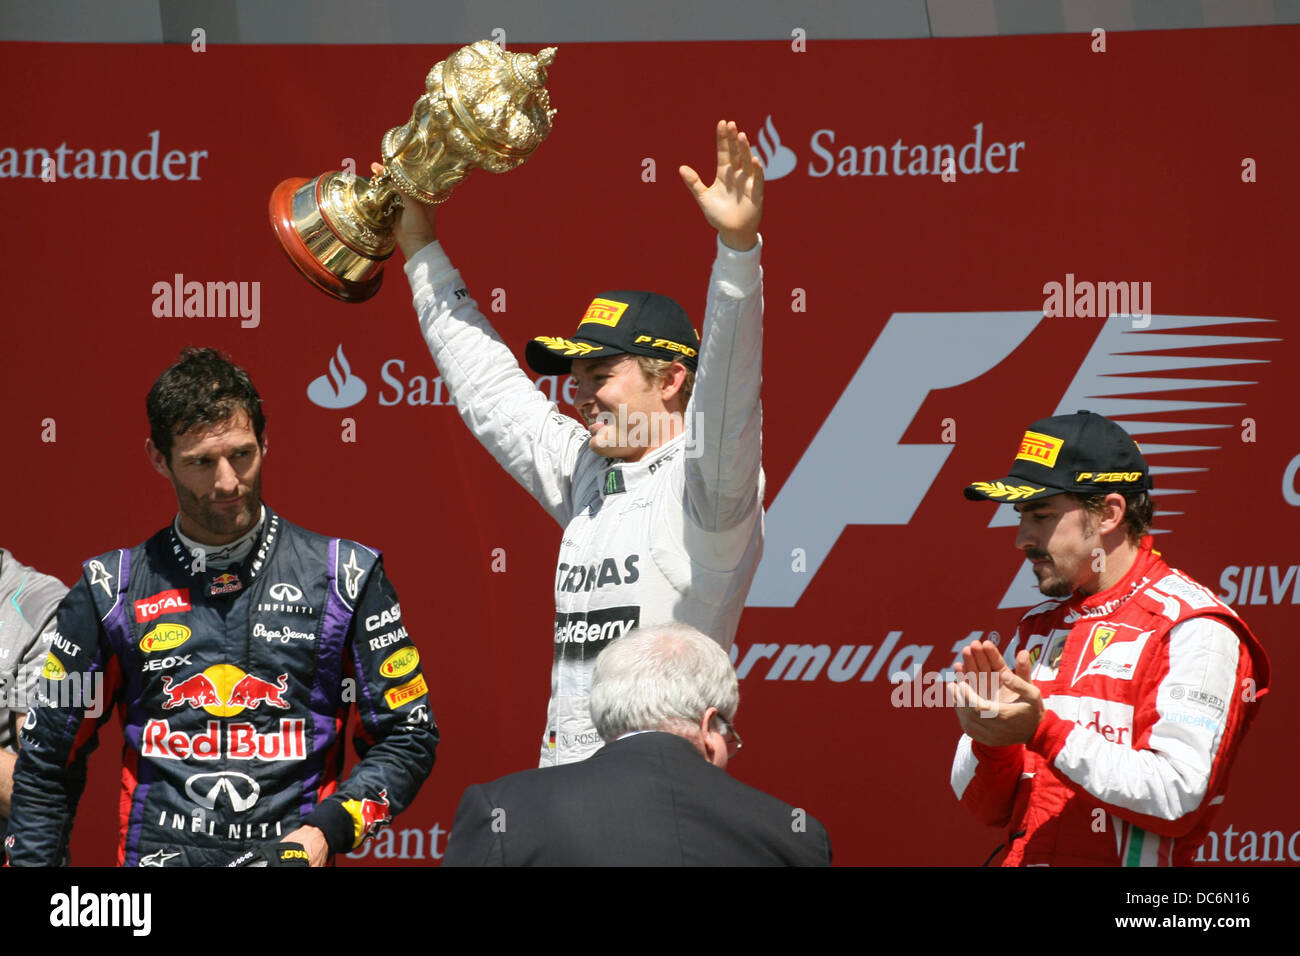 Nico Rosberg celebrates winning on the podium at the 2013 F1 British Grand Prix, Silverstone. Stock Photo